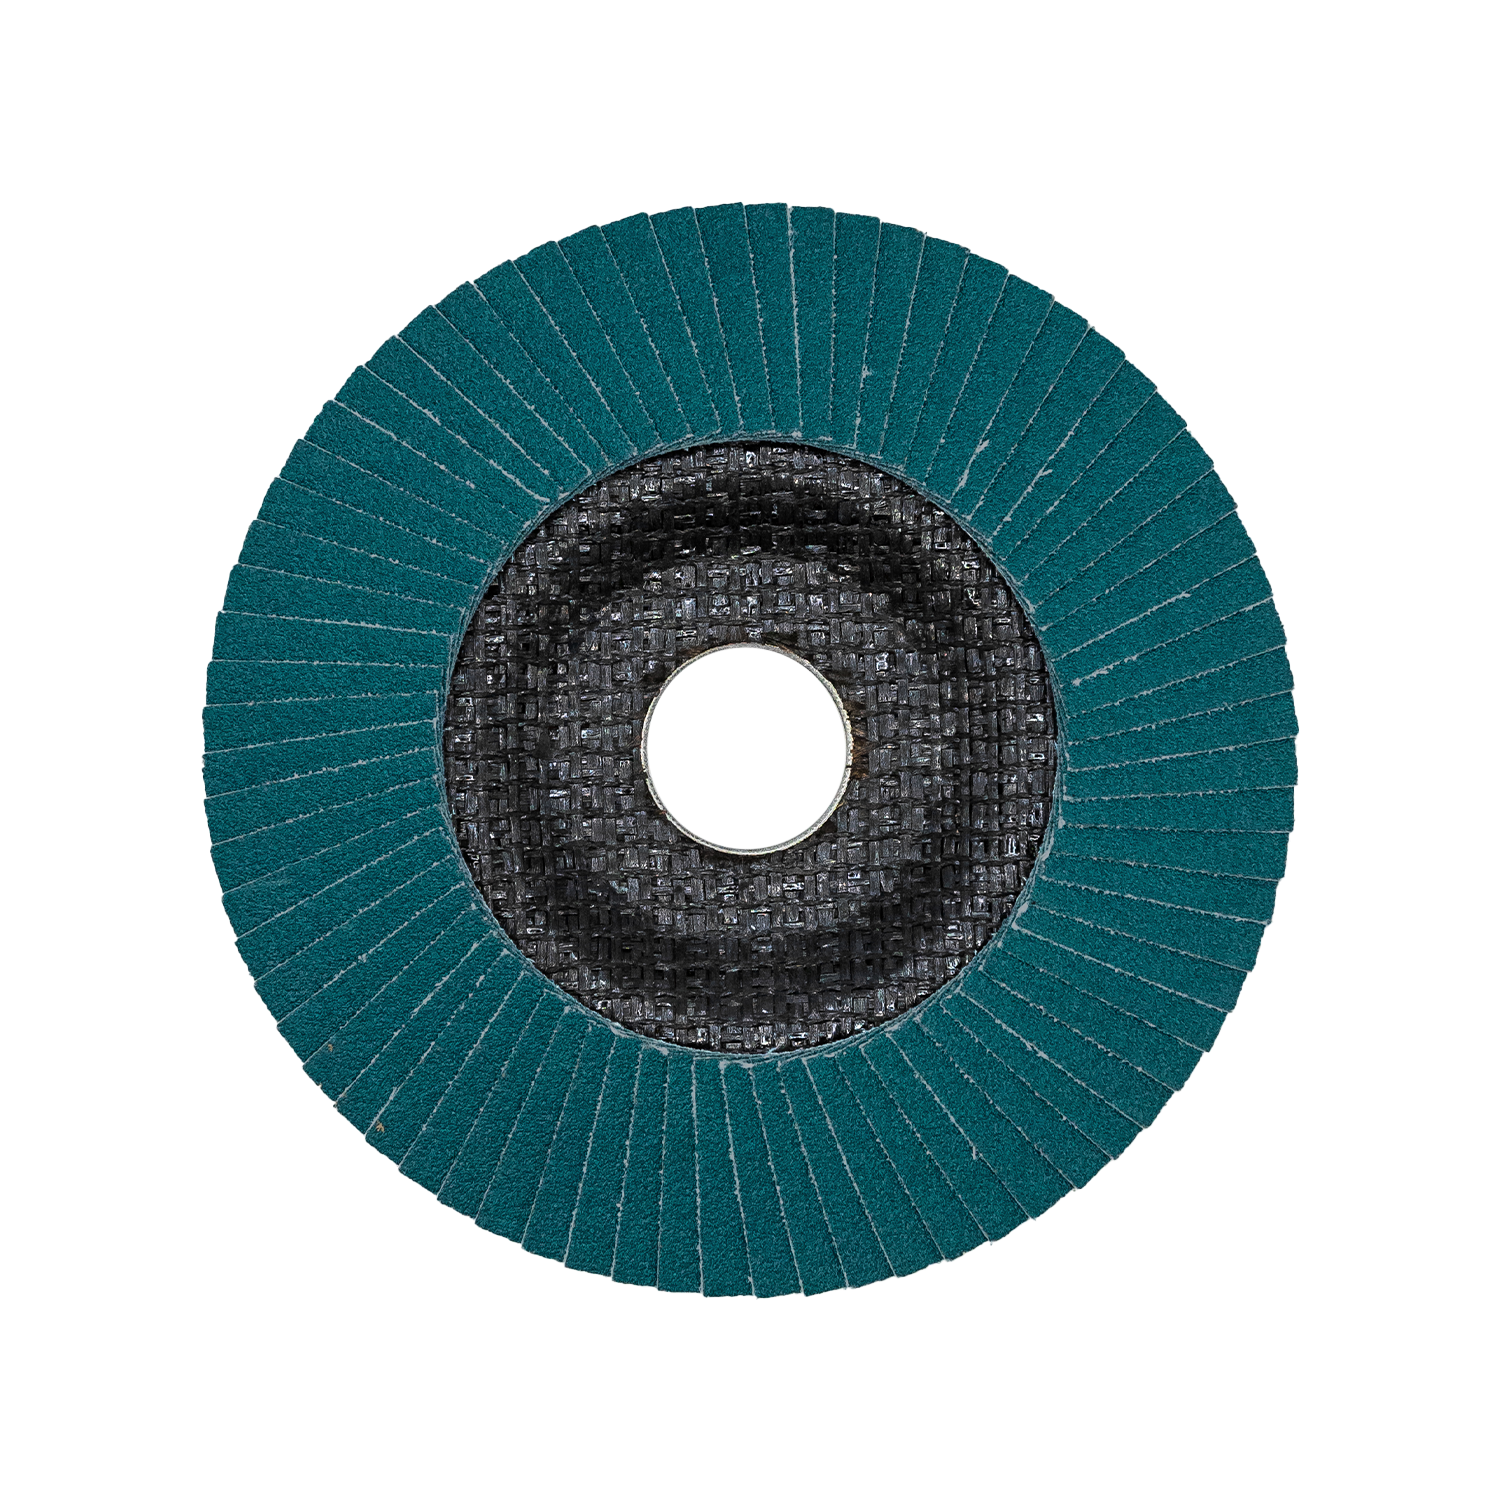 S-K-S 961 disco lamellare in zirconio, 125 mm, 22,23 mm, P40, 2 in 1 per acciaio e acciaio inox